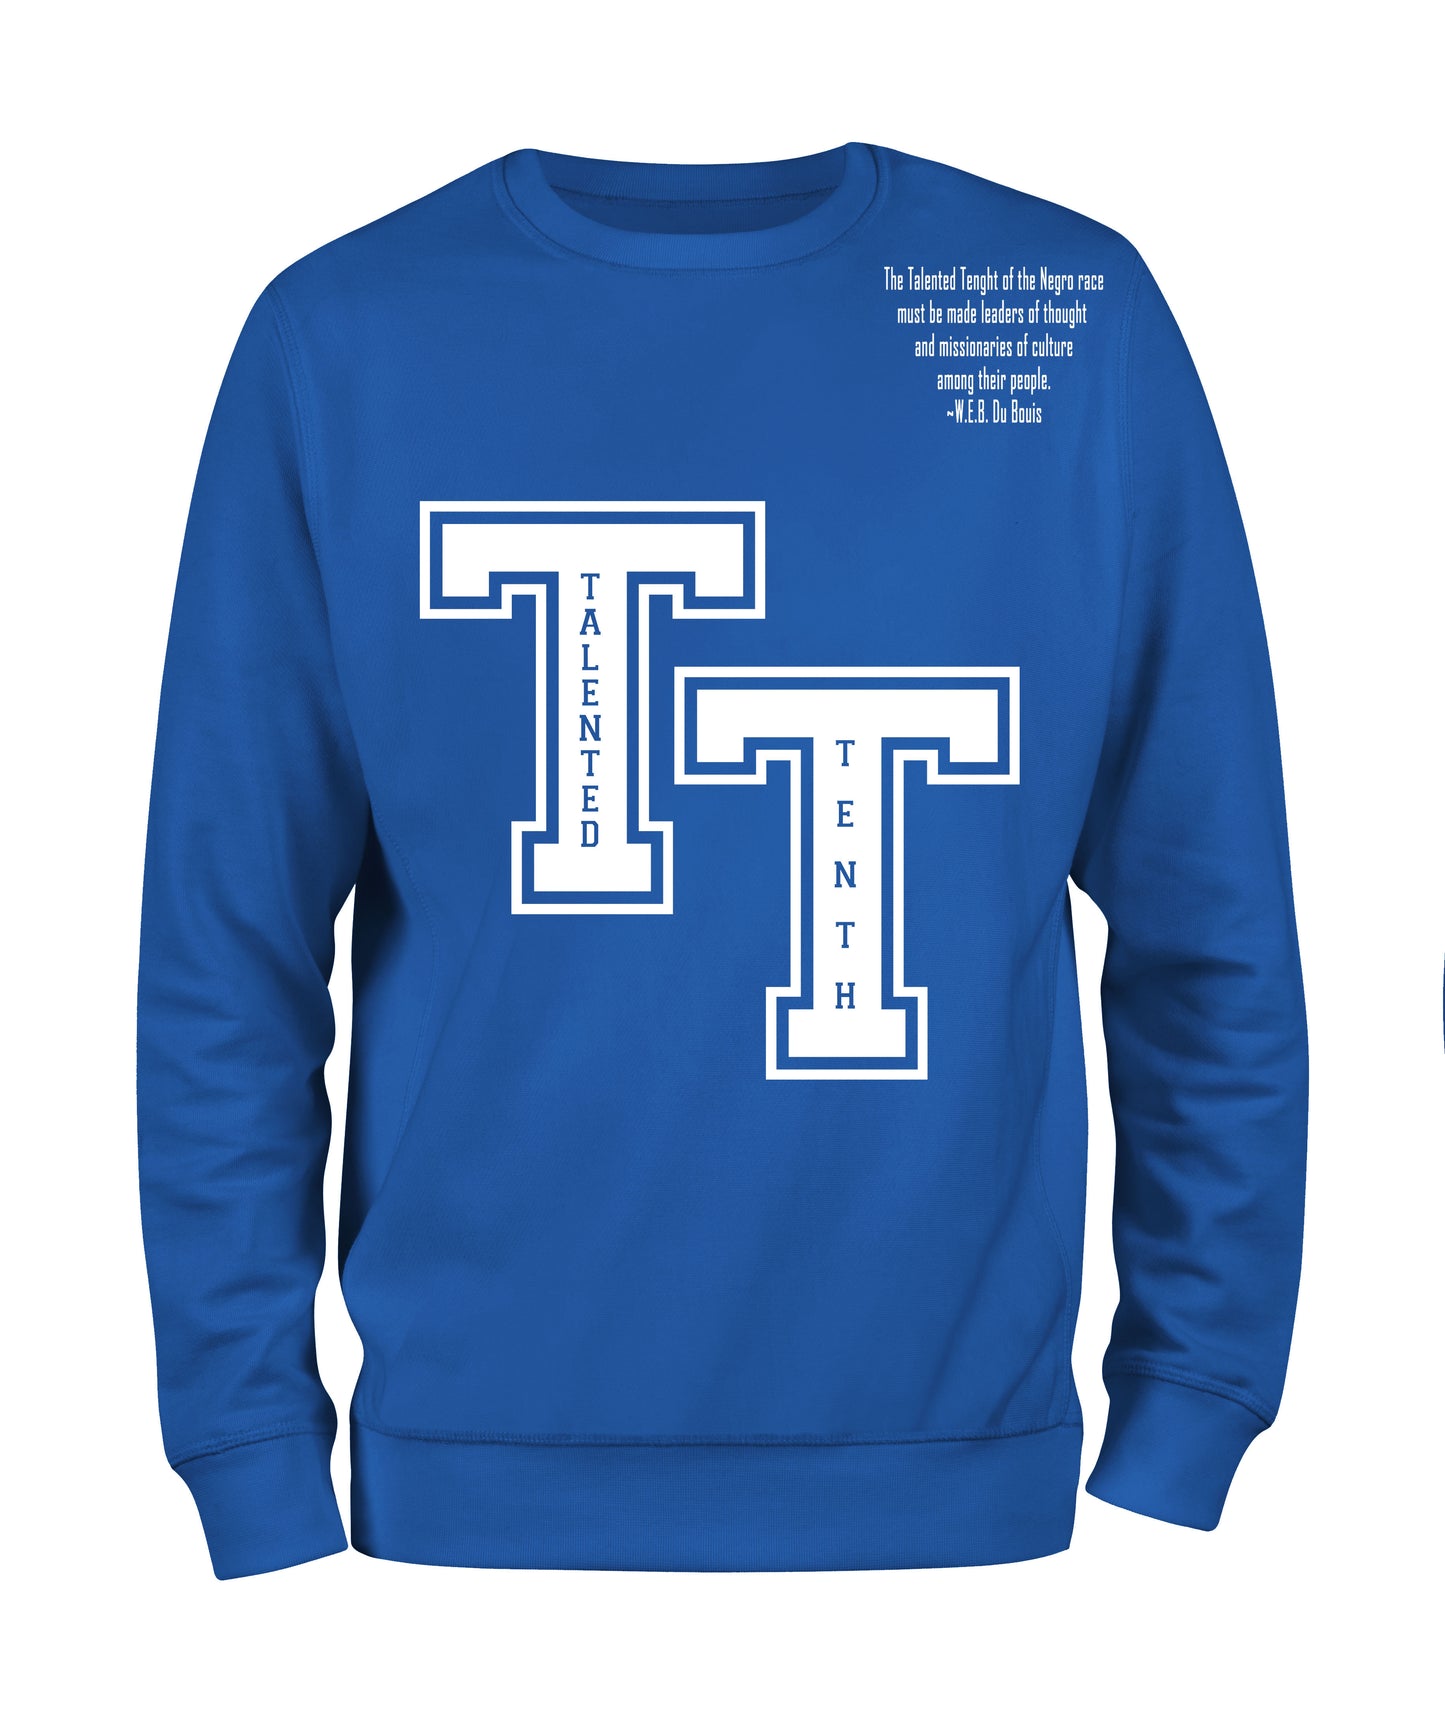 Talented Tenth Sweatshirt - Black10.com